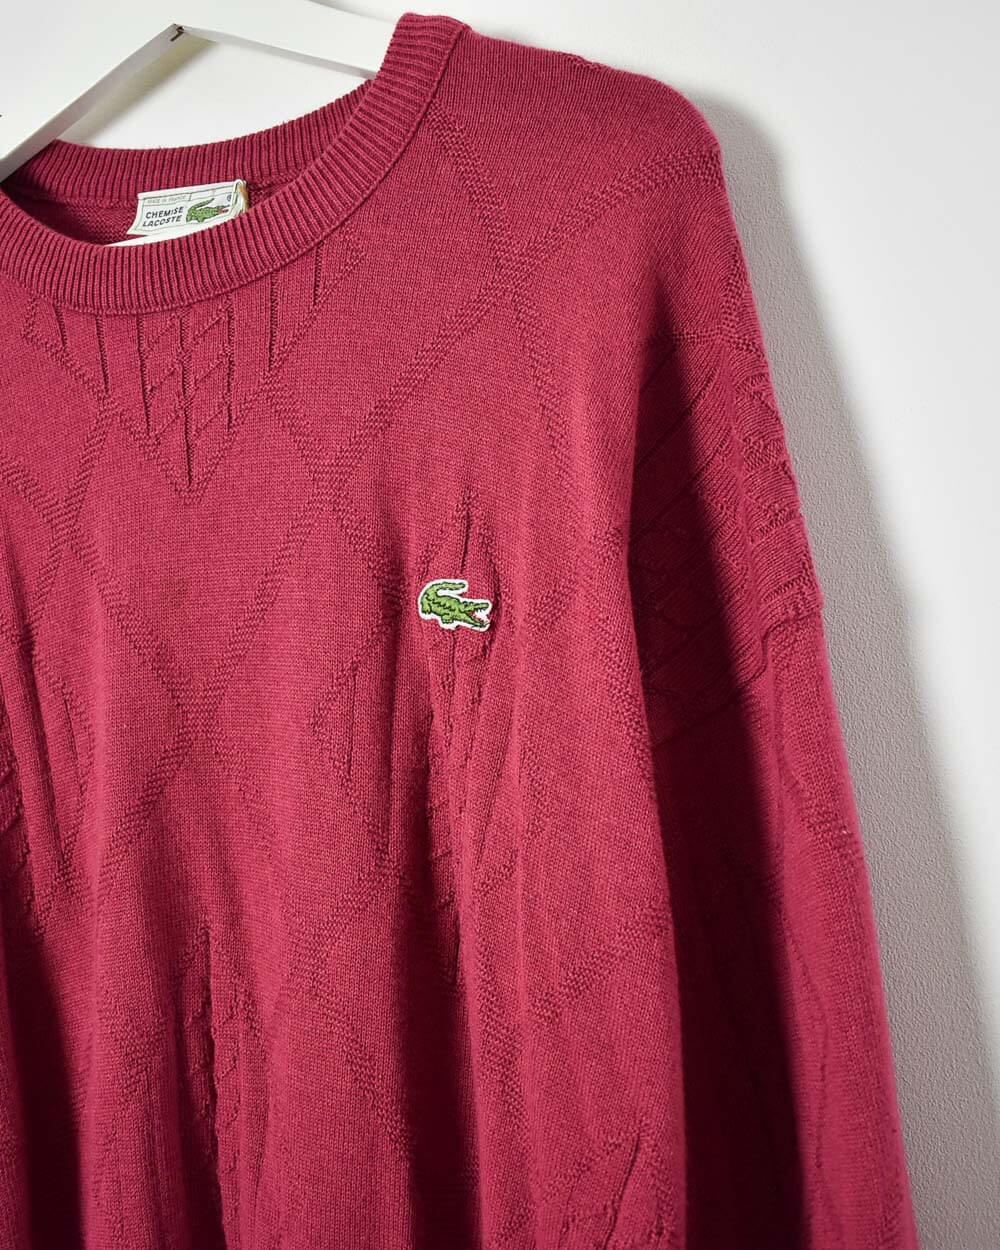 Maroon Chemise Lacoste Knitted Sweatshirt - Large